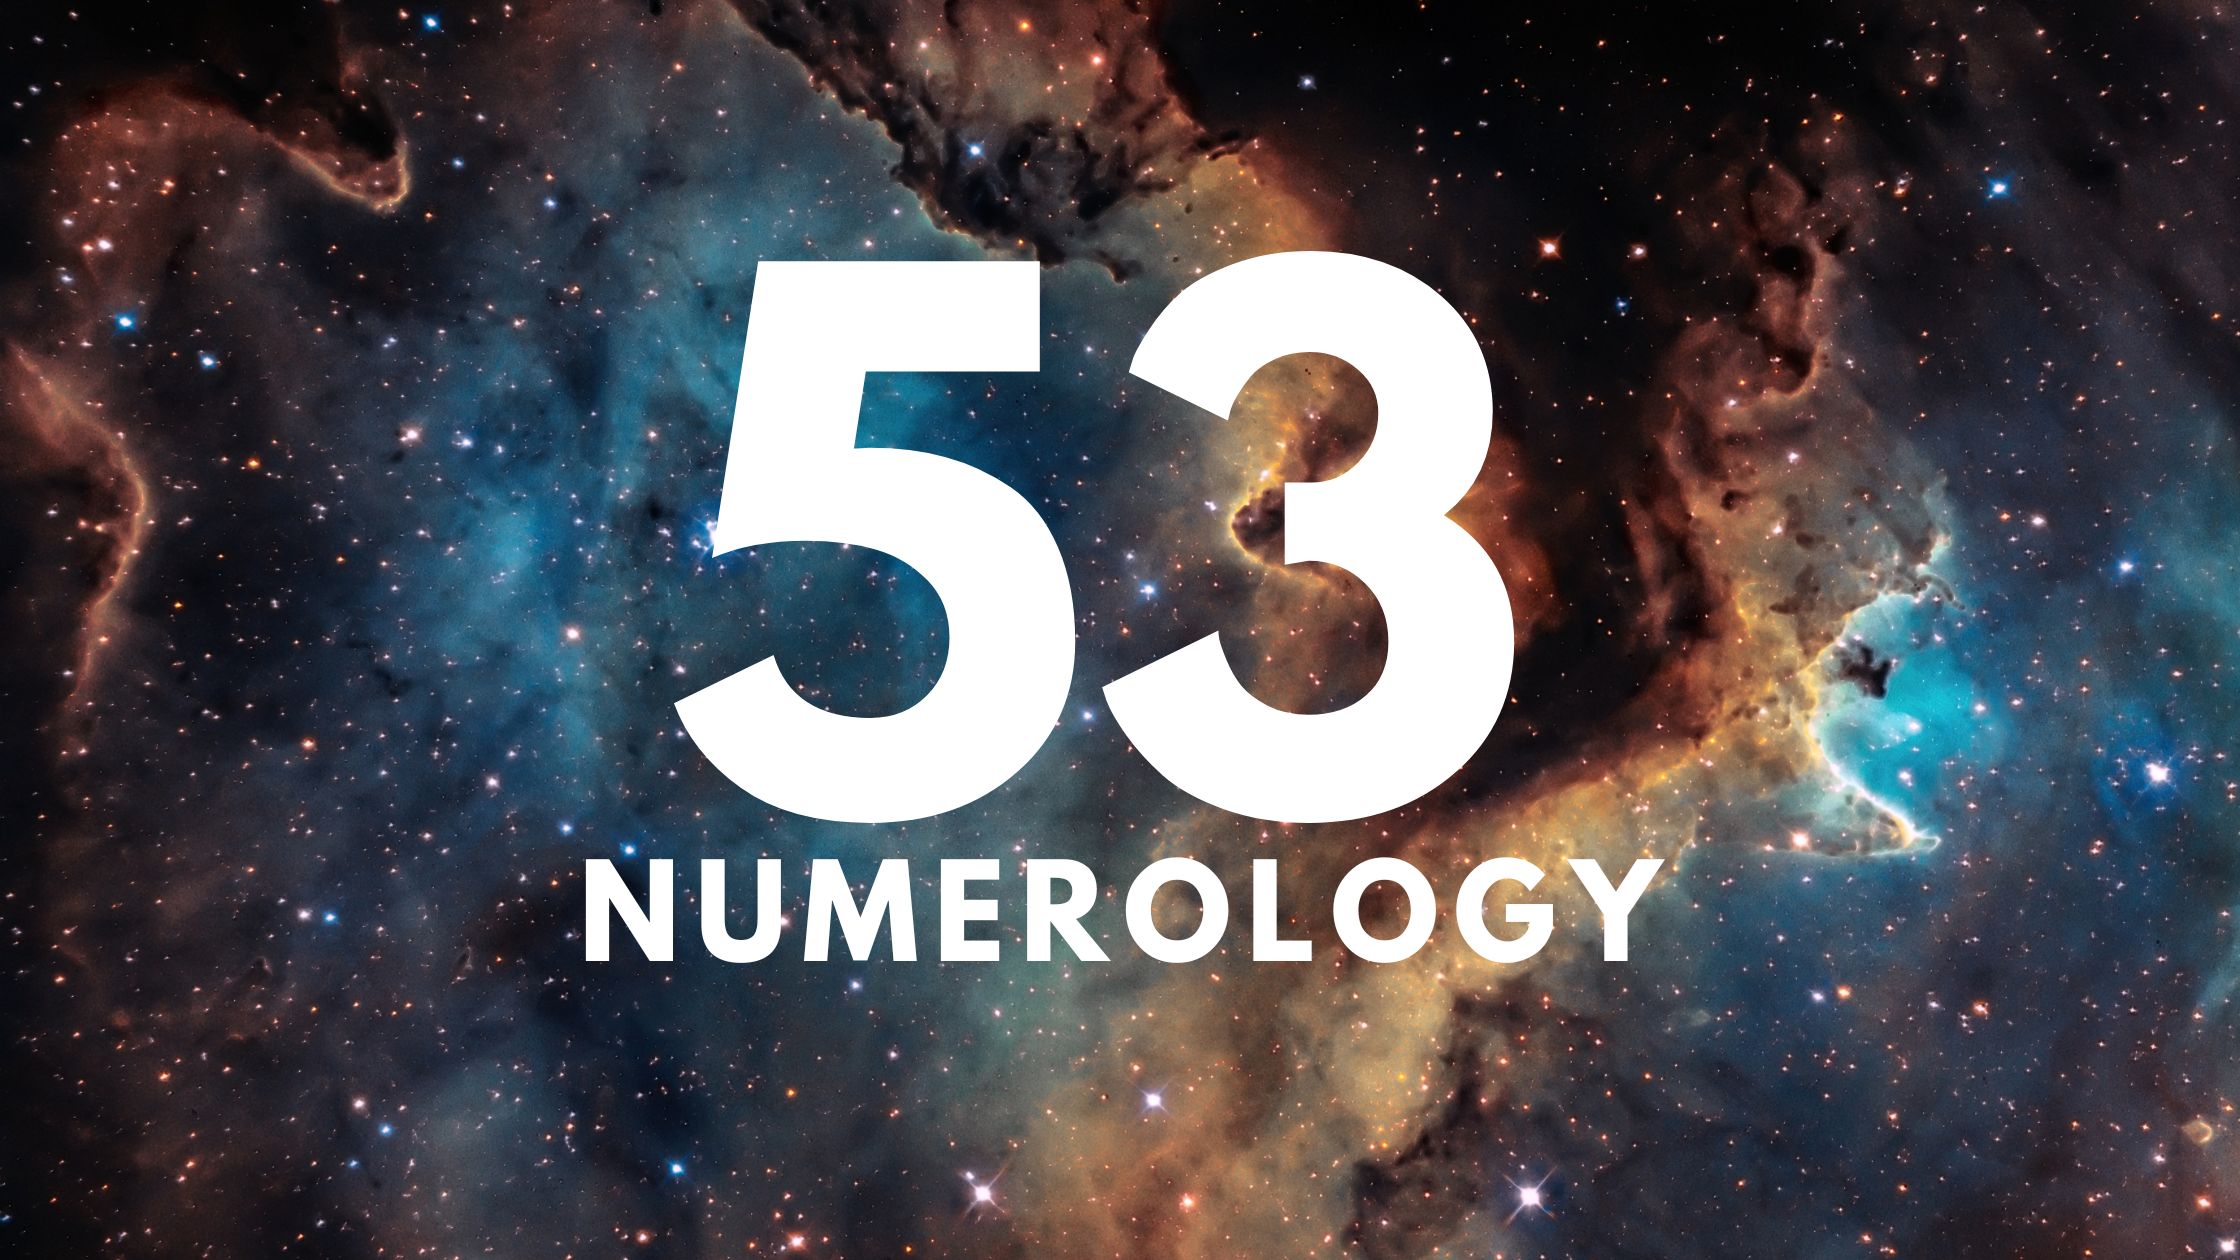 Numerology 53